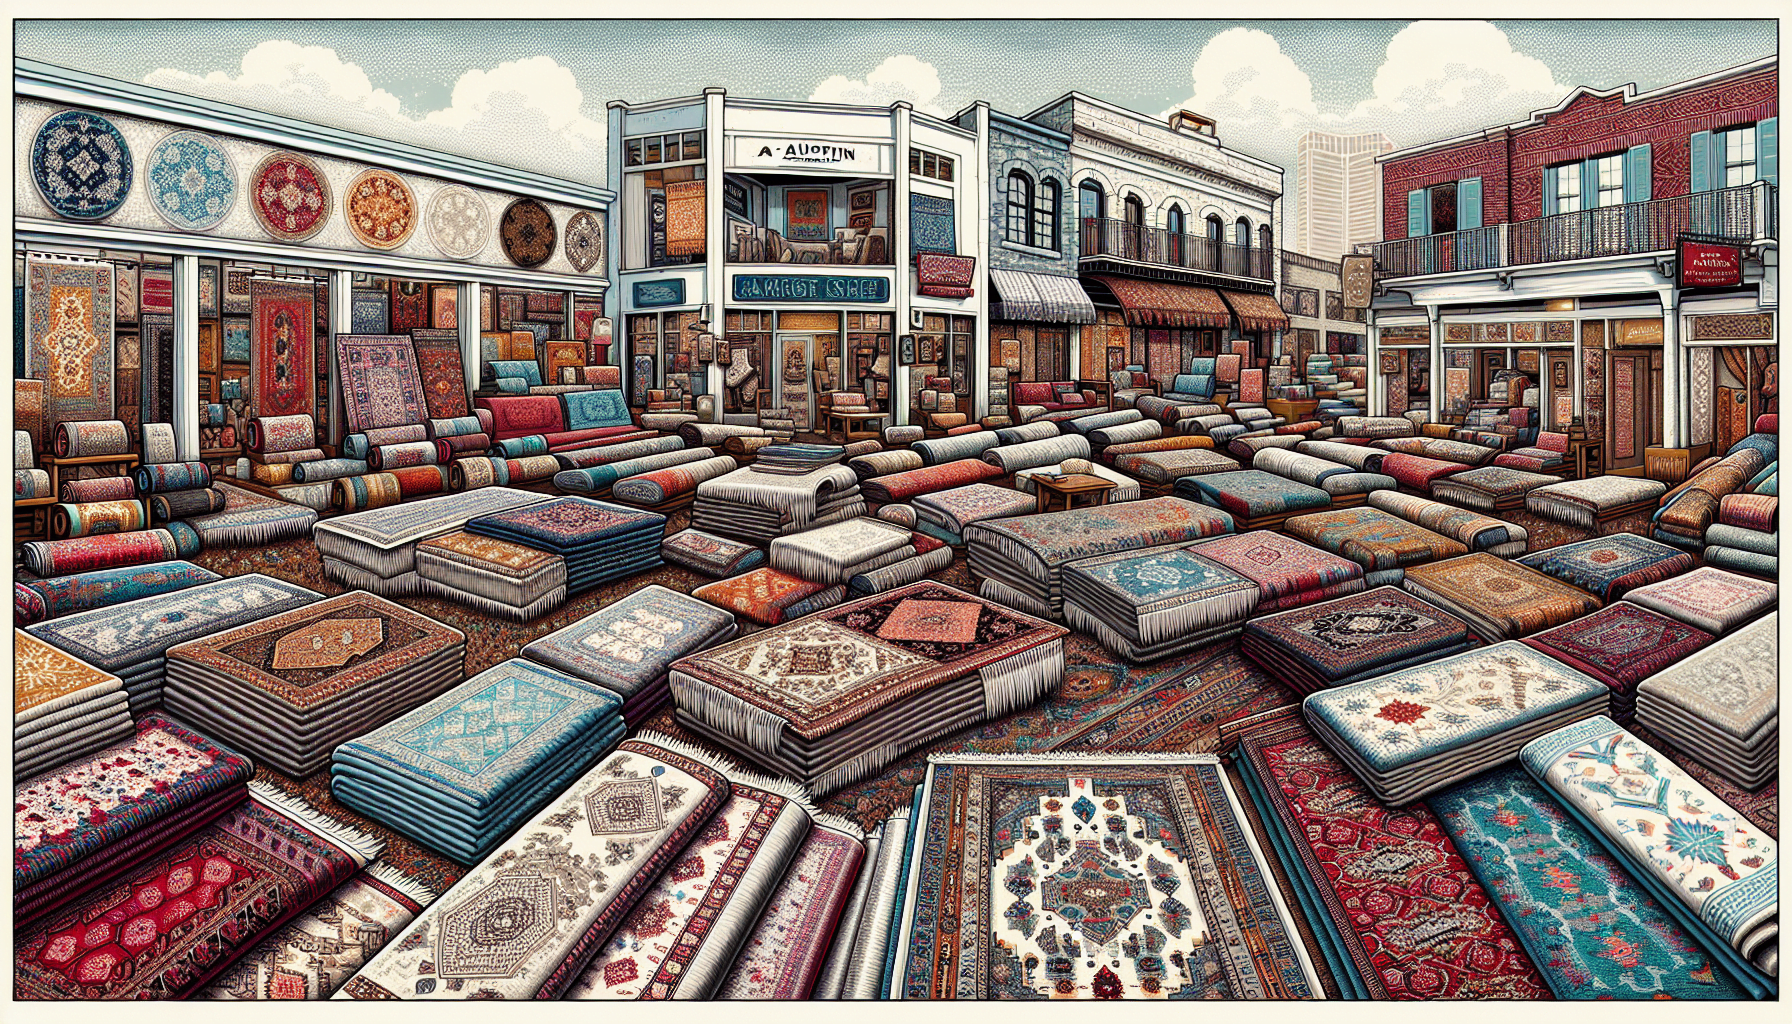 Variety of handmade rugs at Austin's premier rug destinations